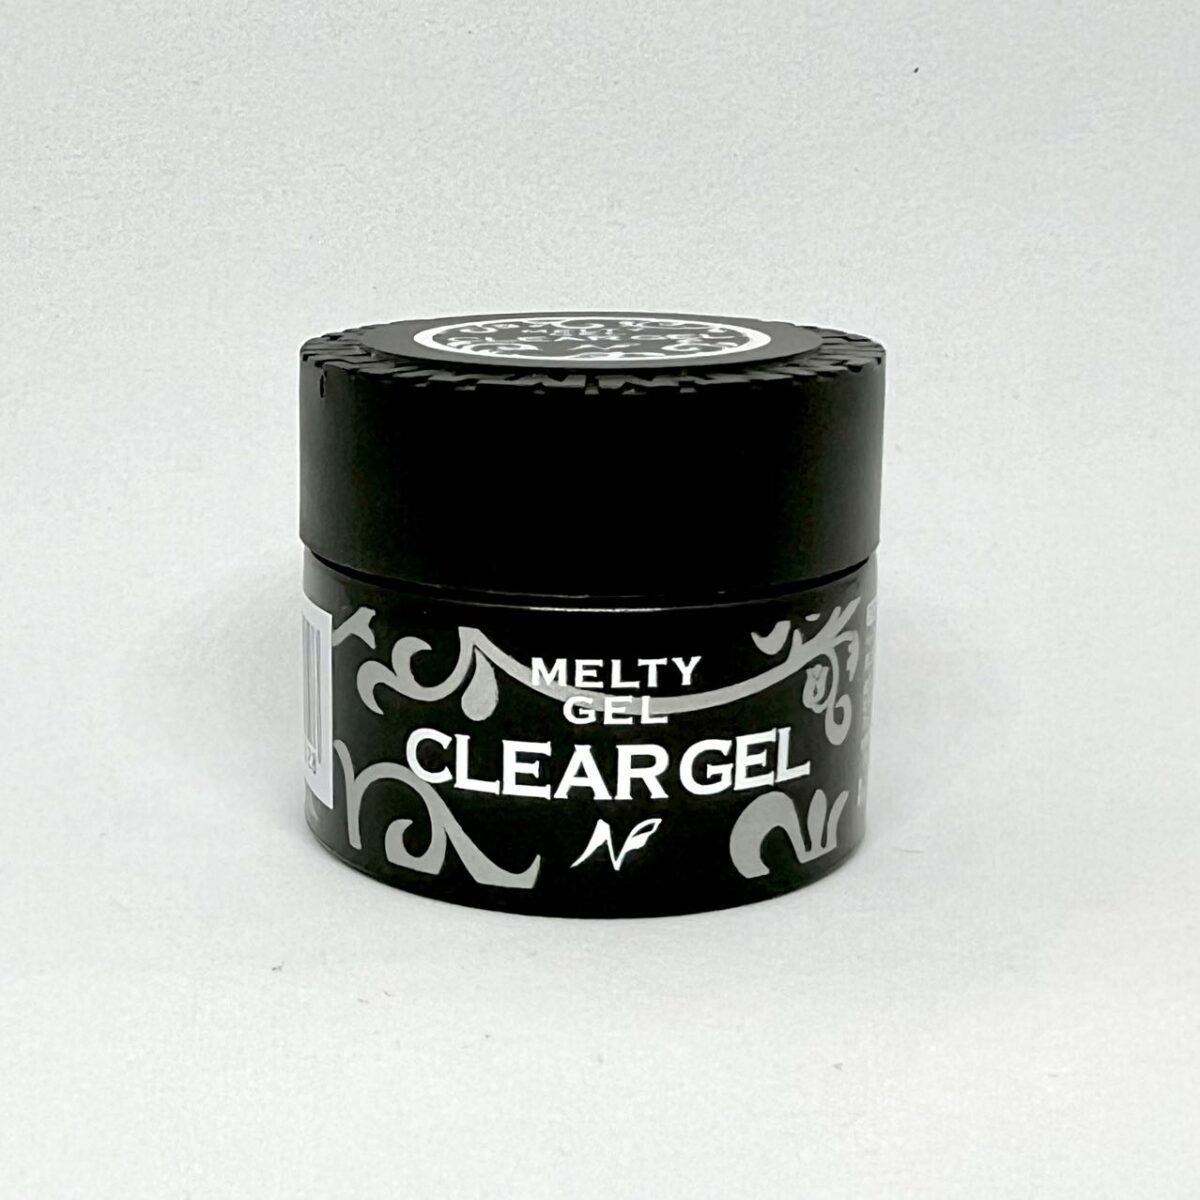 Melty Gel（メルティジェル） クリアジェル | 商品情報 | ナチュラル 